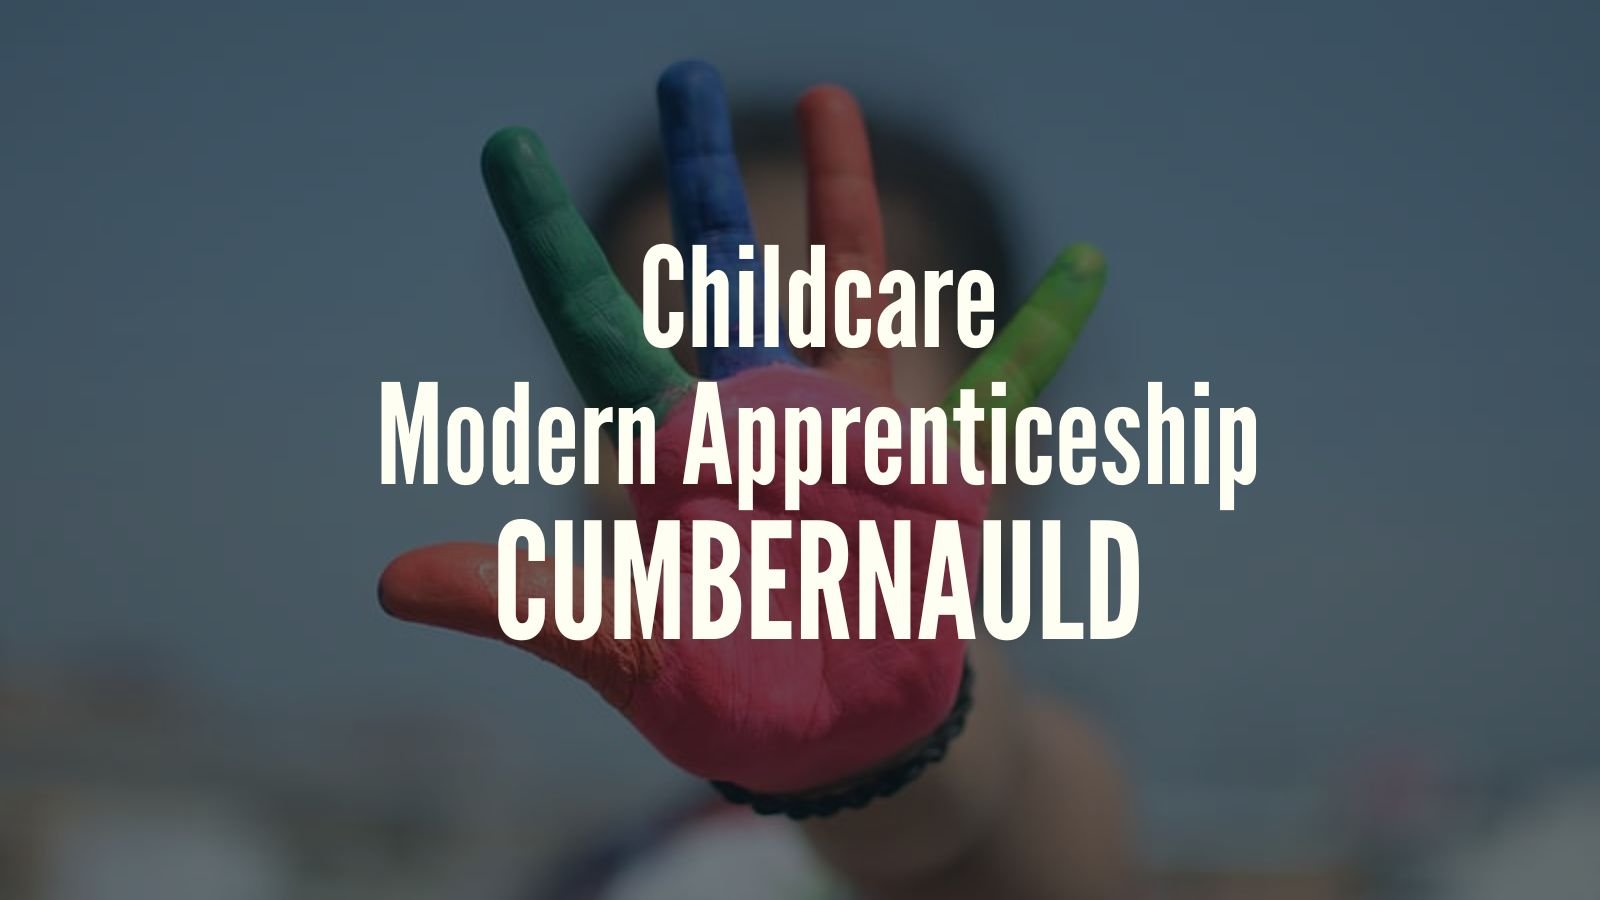 Childcare Modern Apprenticeship Vacancy Cumbernauld